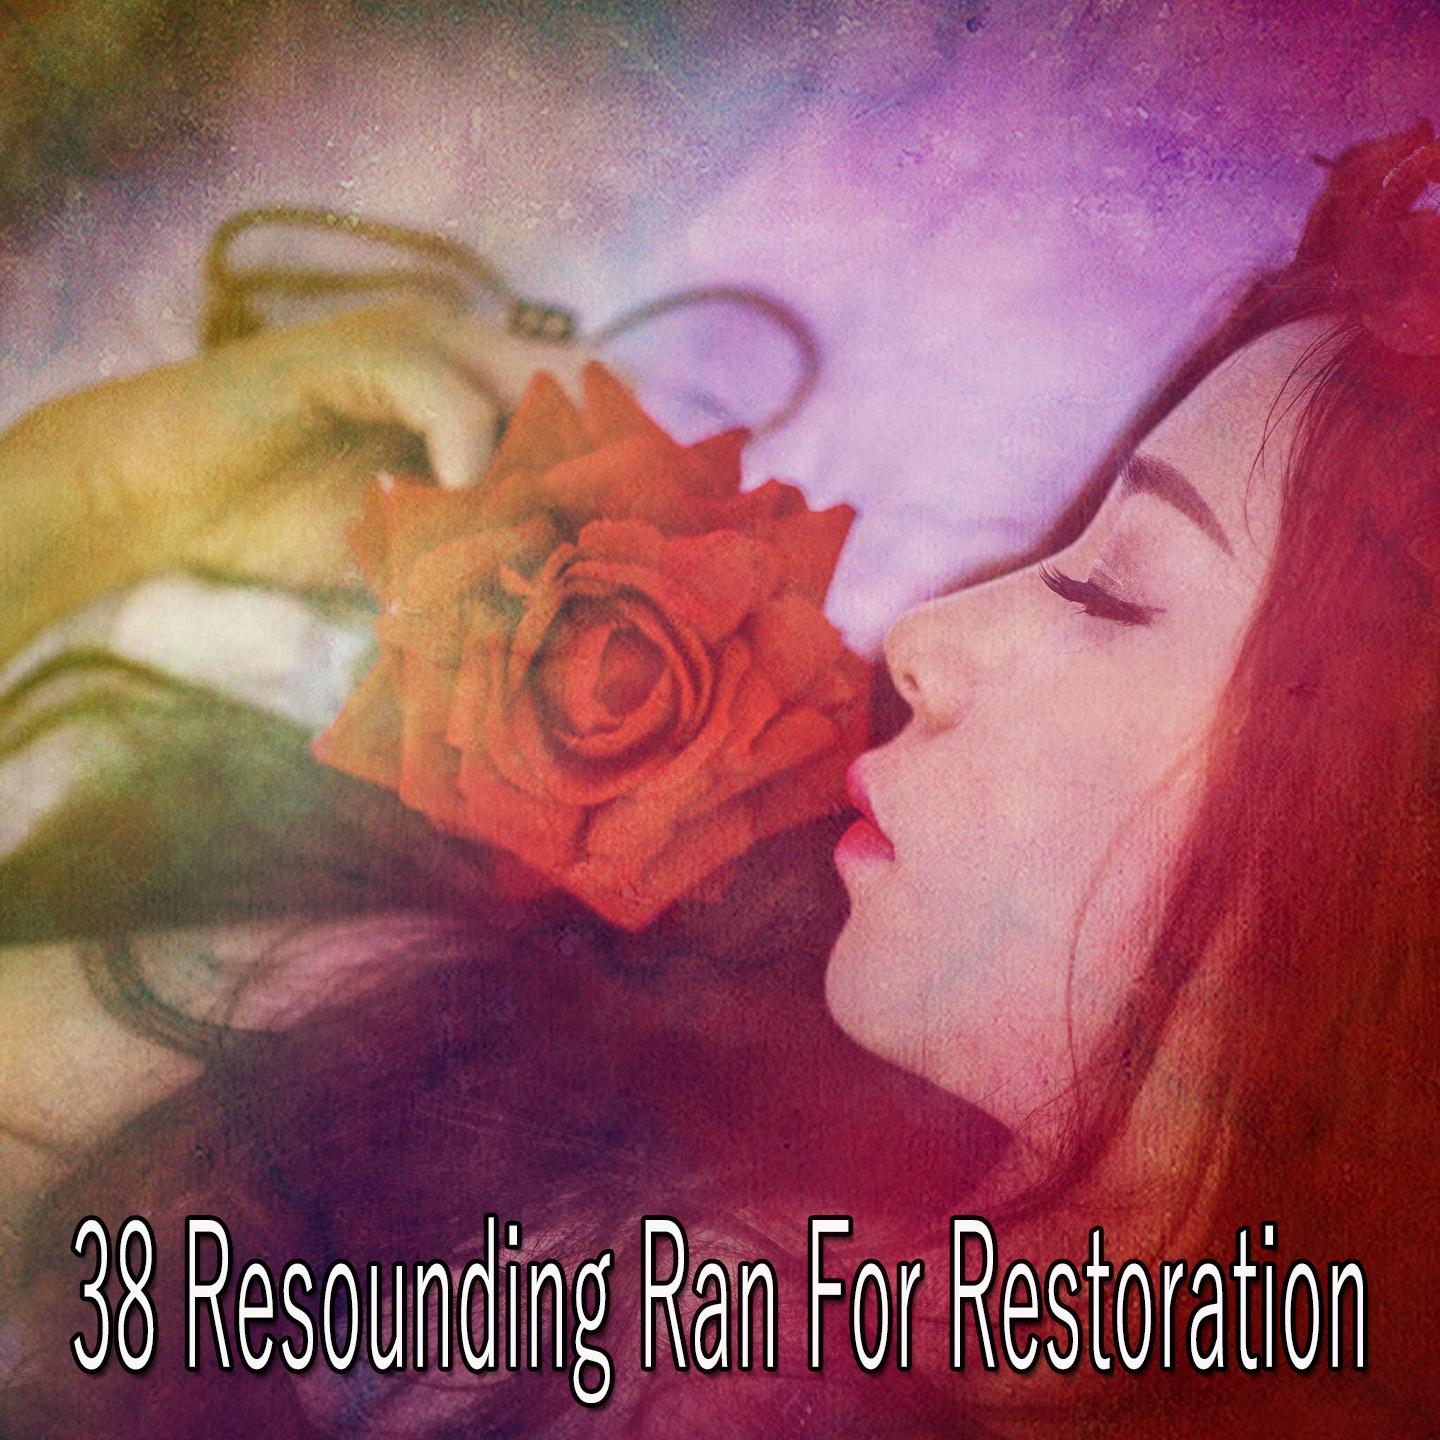 38 Resounding Ran for Restoration